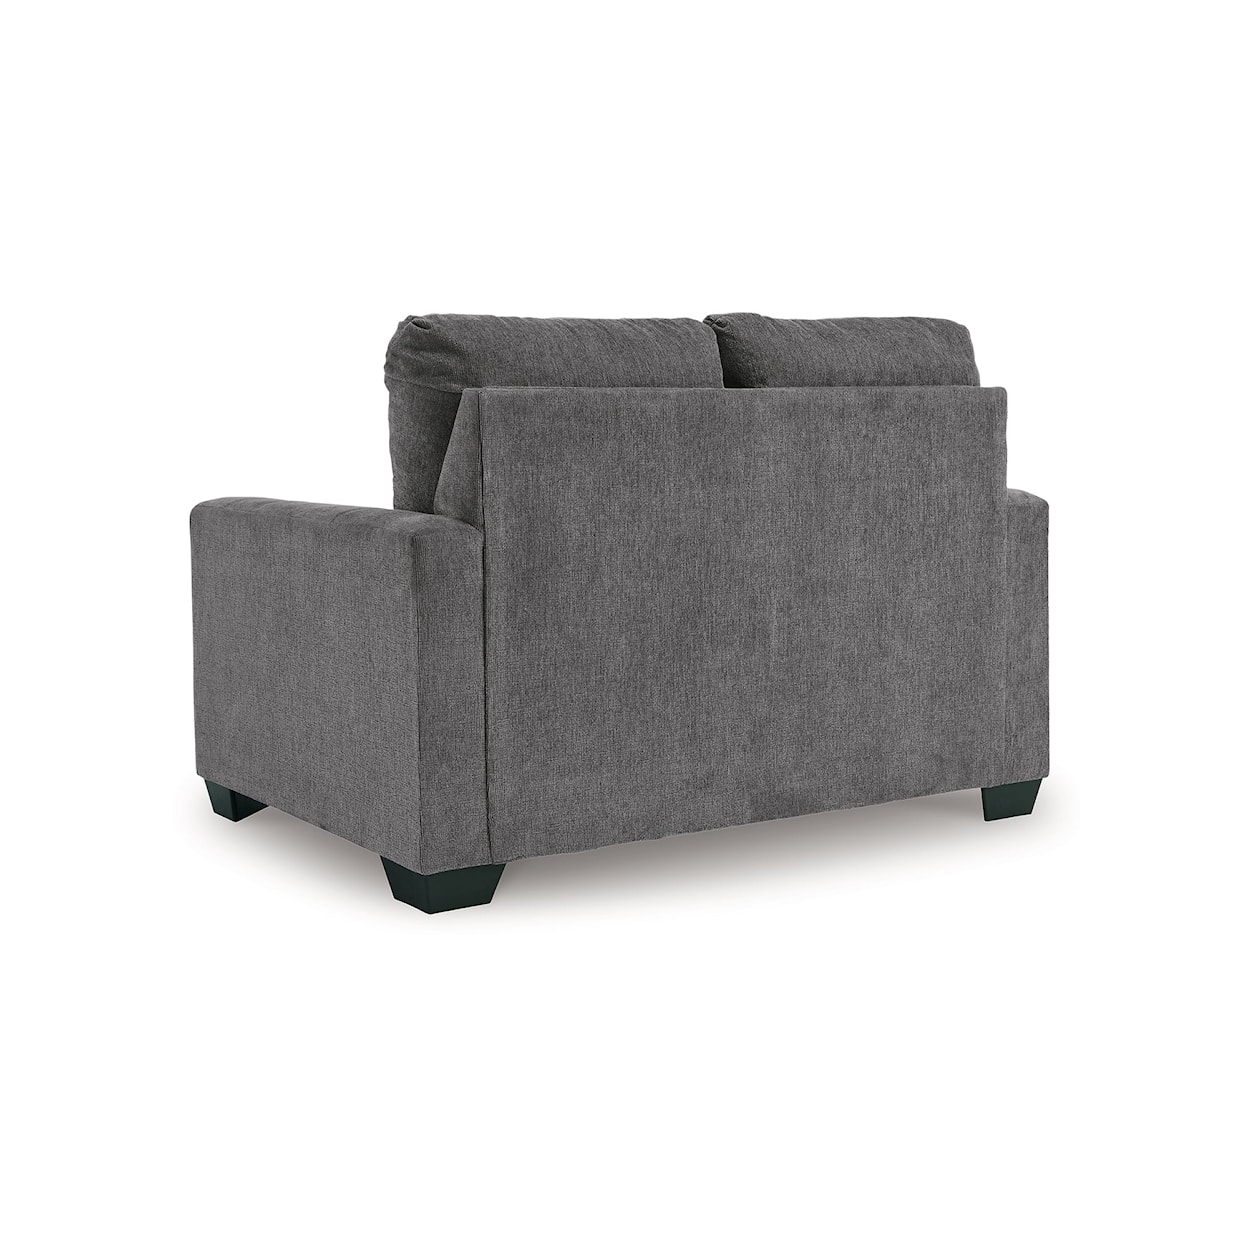 Ashley Furniture Signature Design Rannis Twin Sleeper Sofa